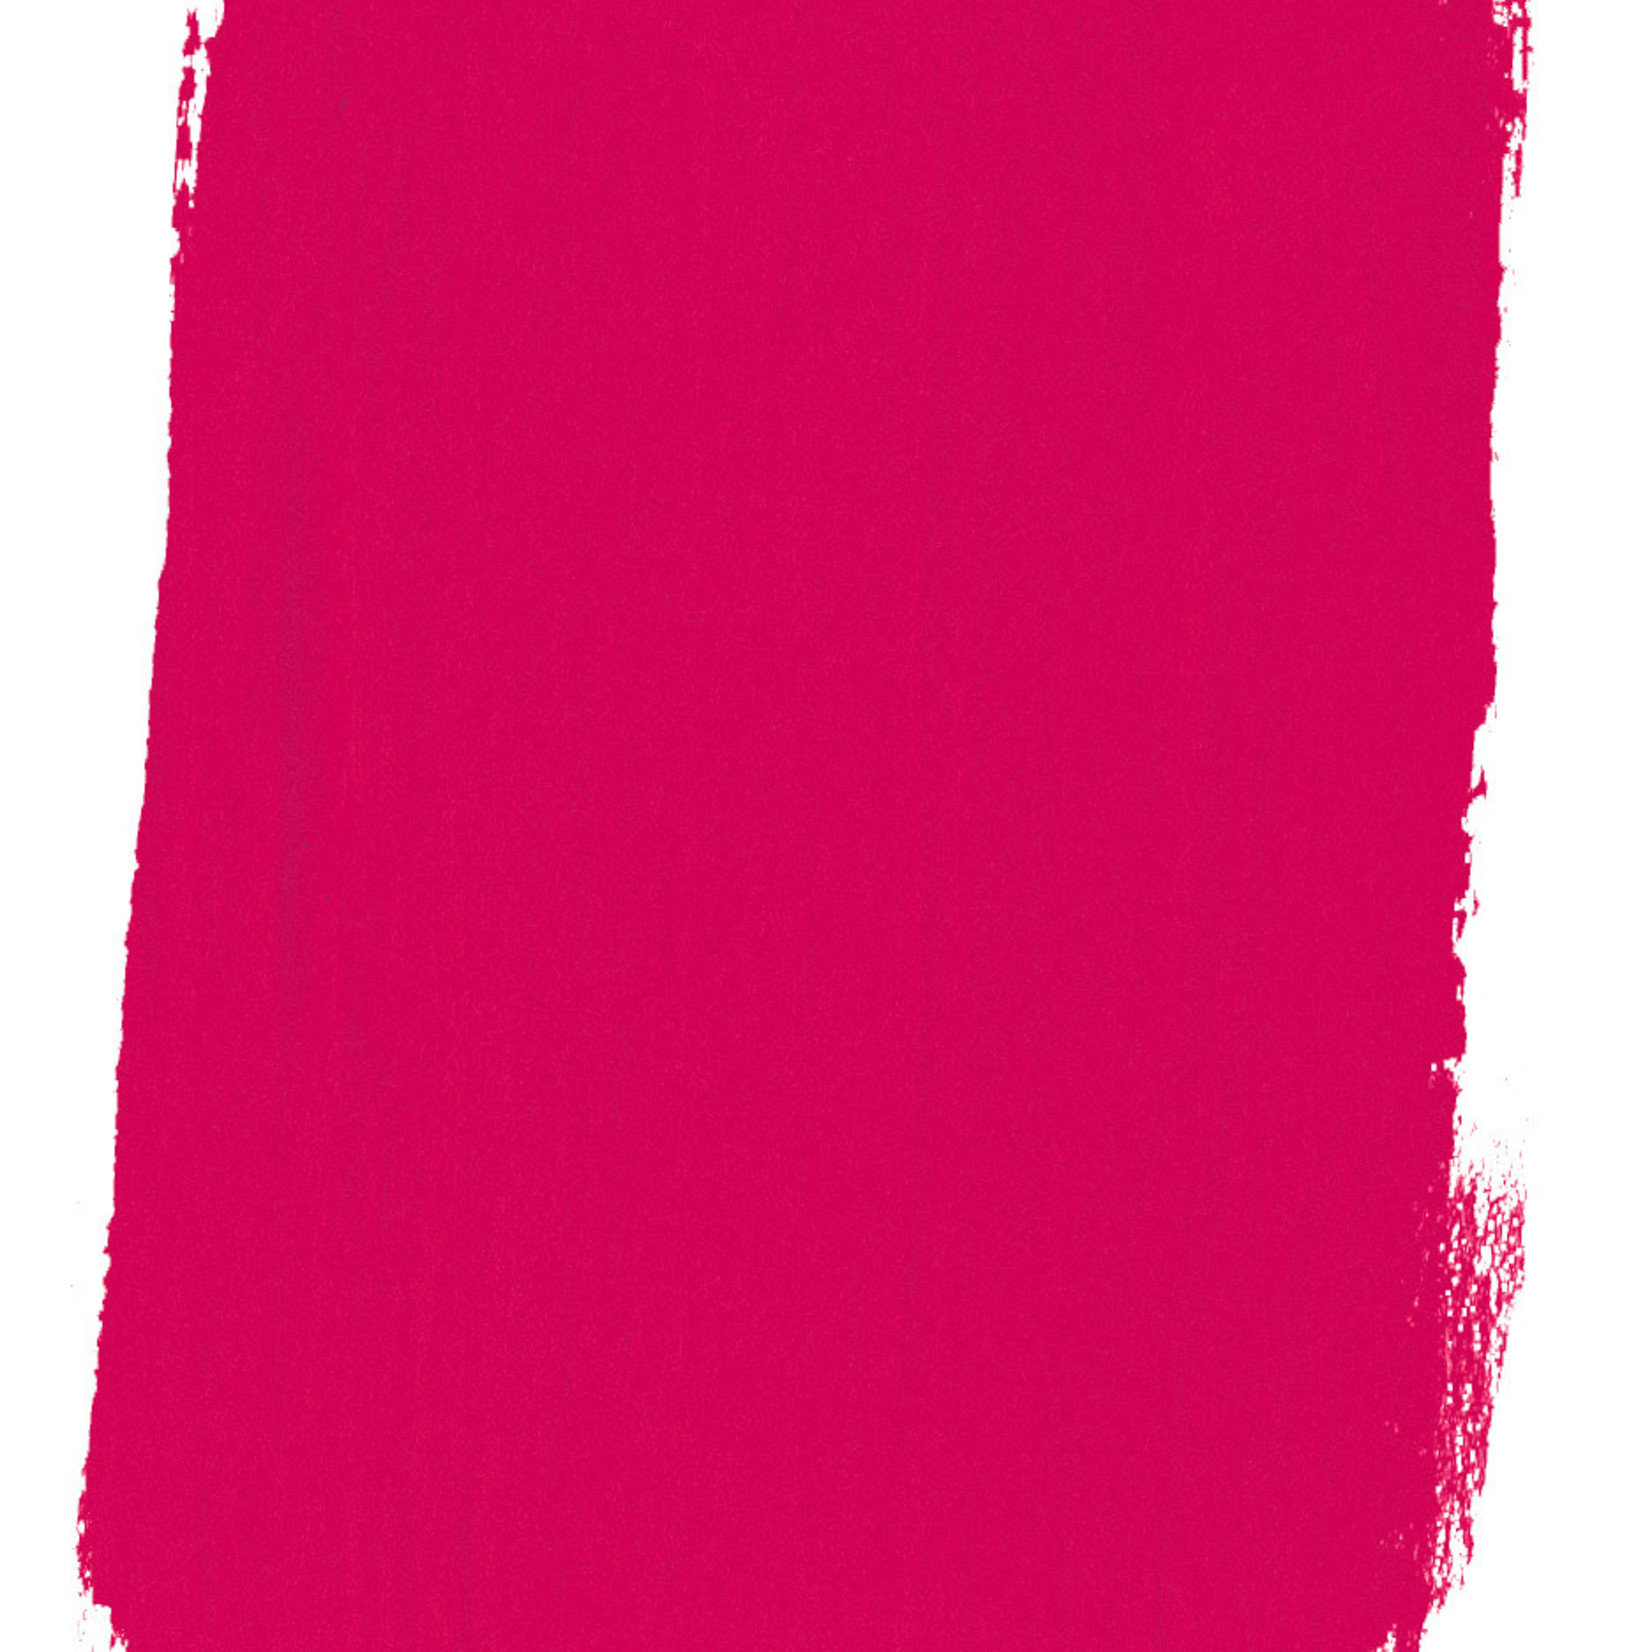 Annie Sloan US Inc Capri Pink